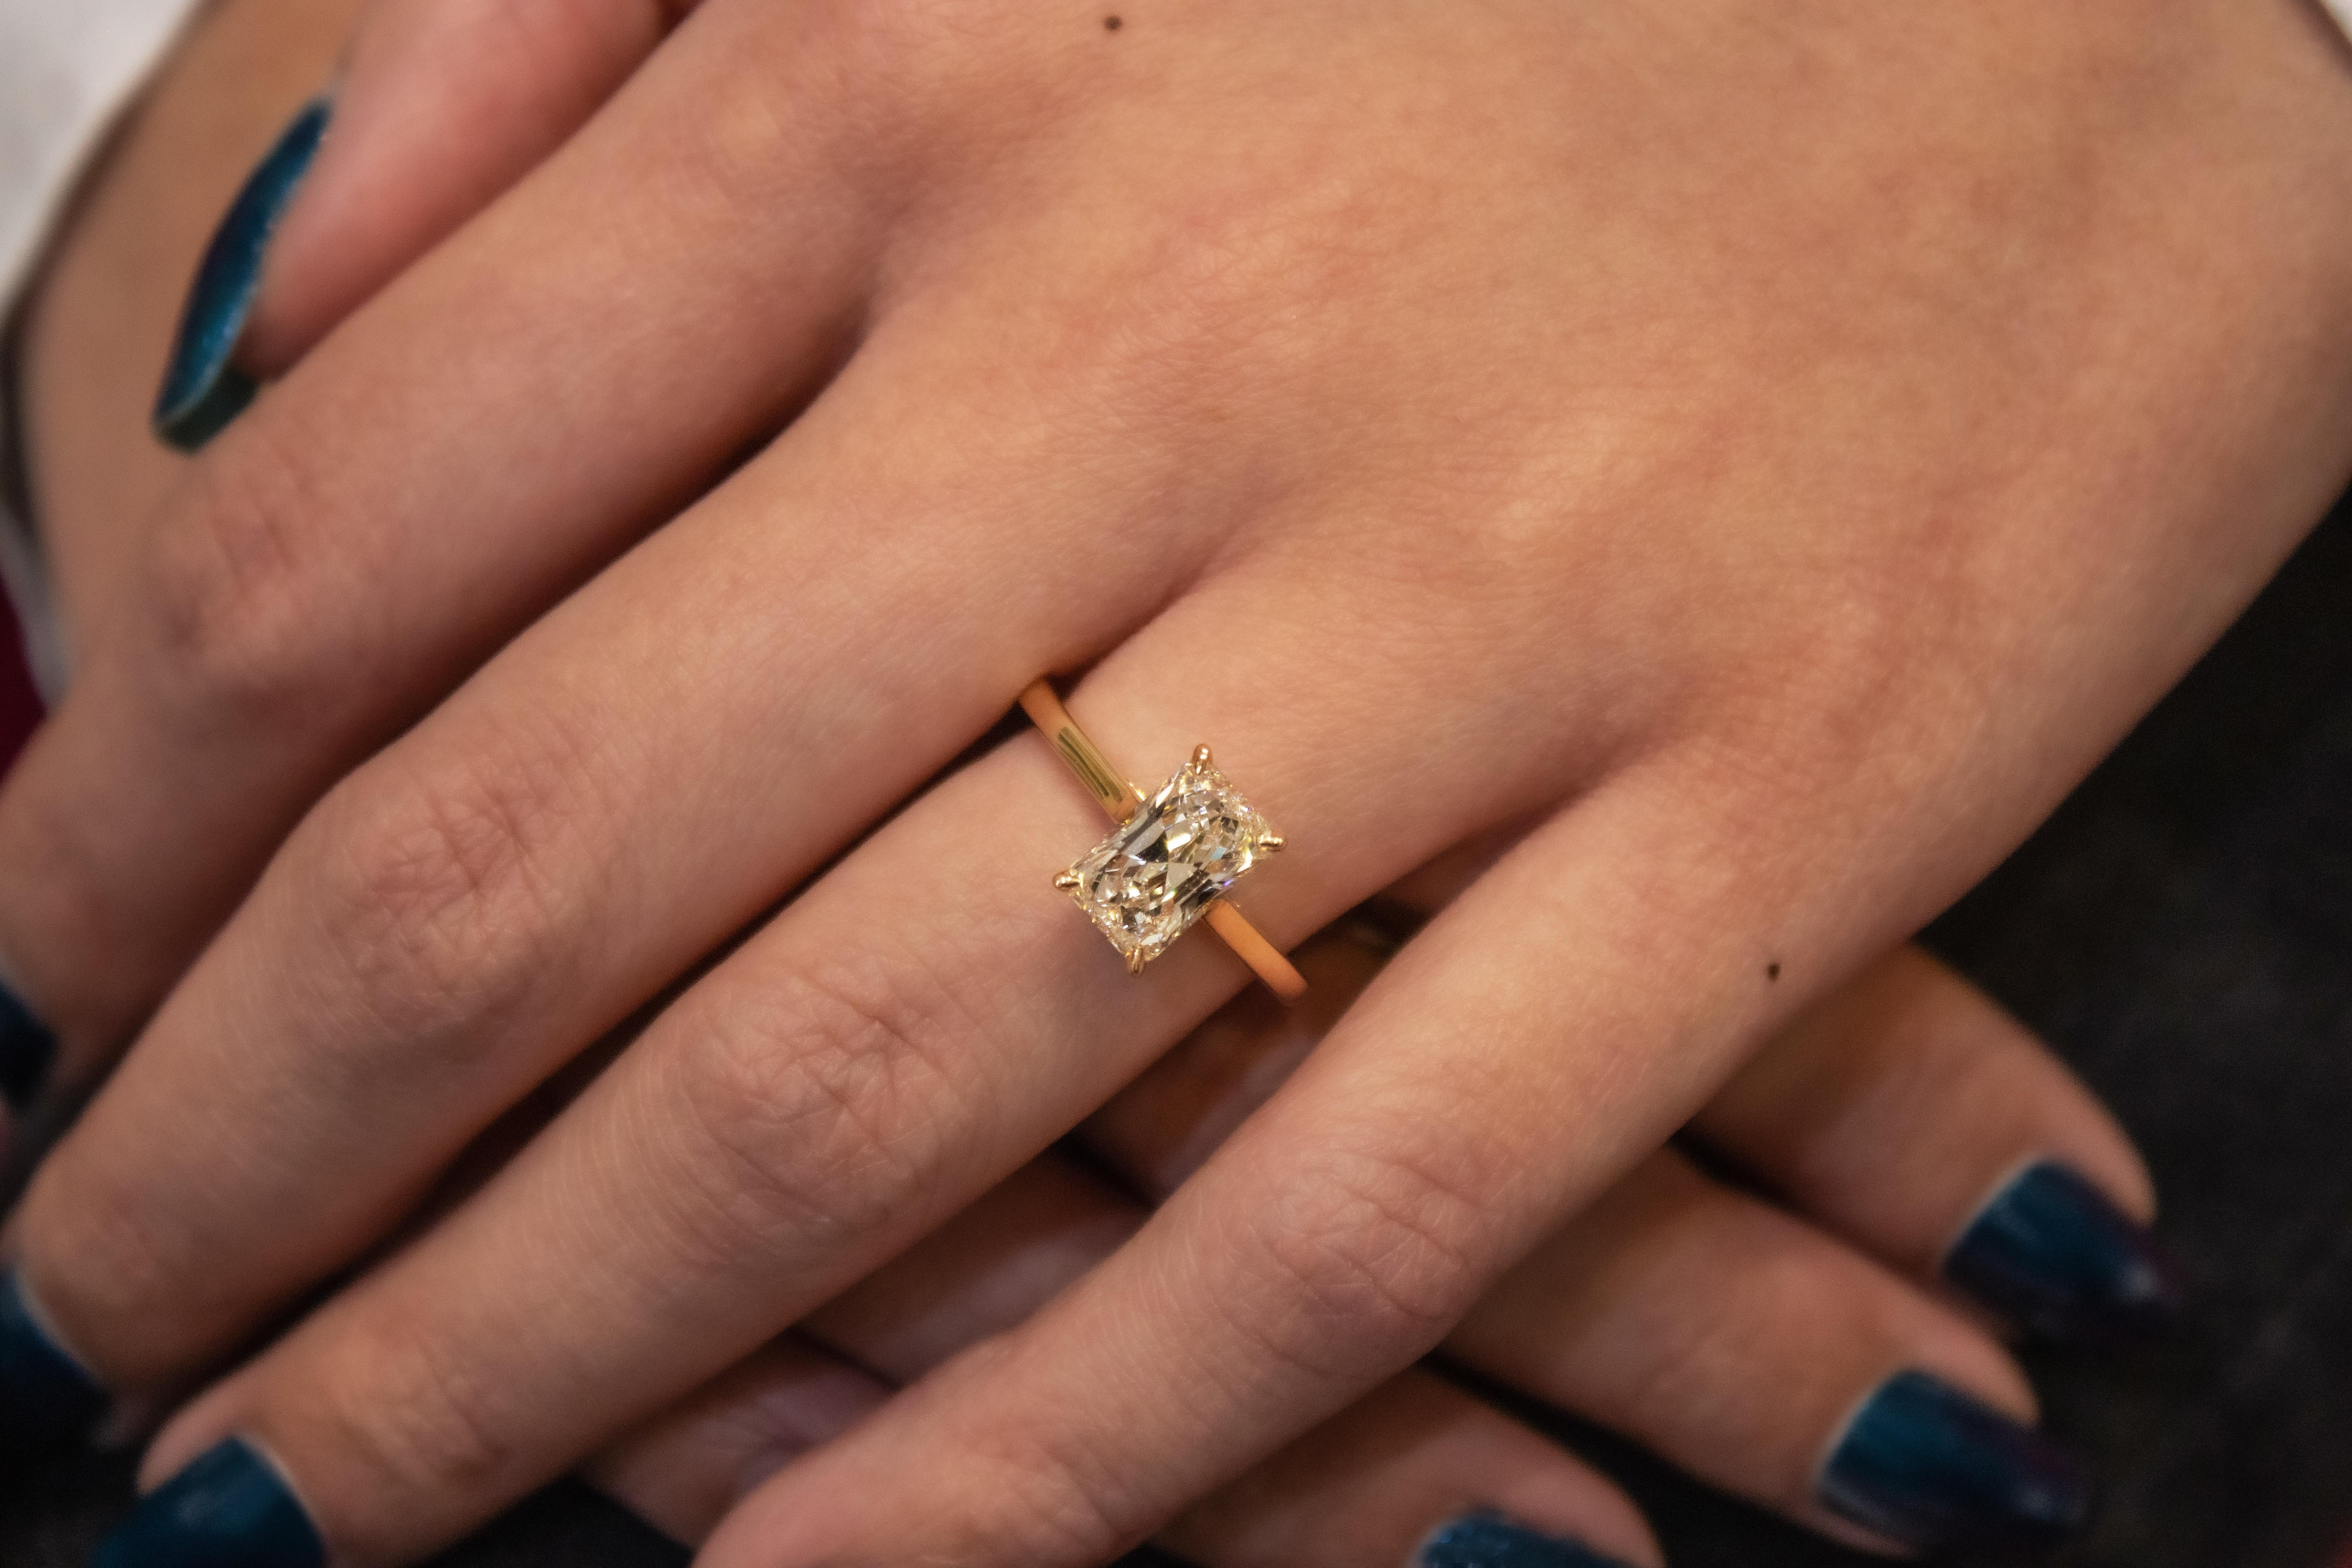 elongated radiant cut engagement rings